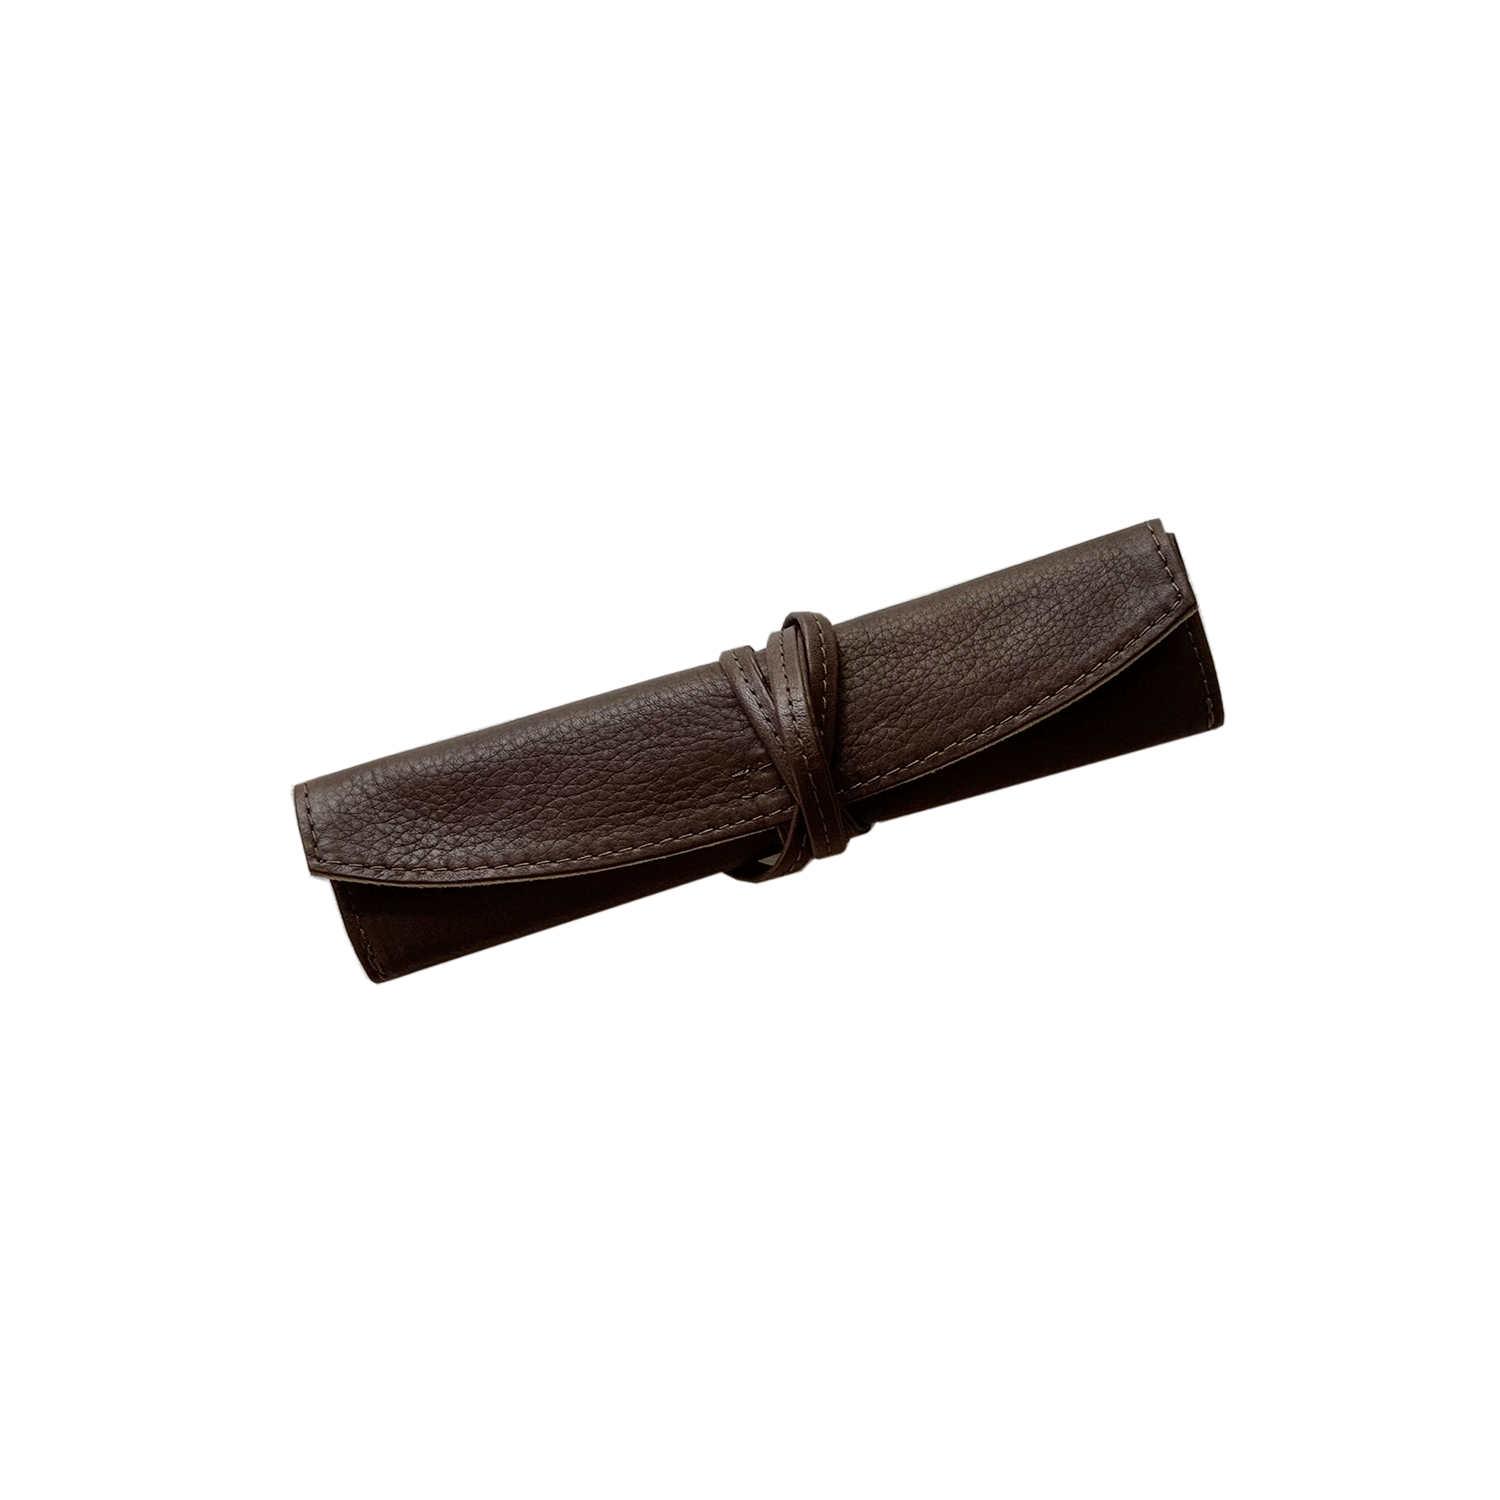 Pilot leather pen case dark brown, 1 pen * Pilot